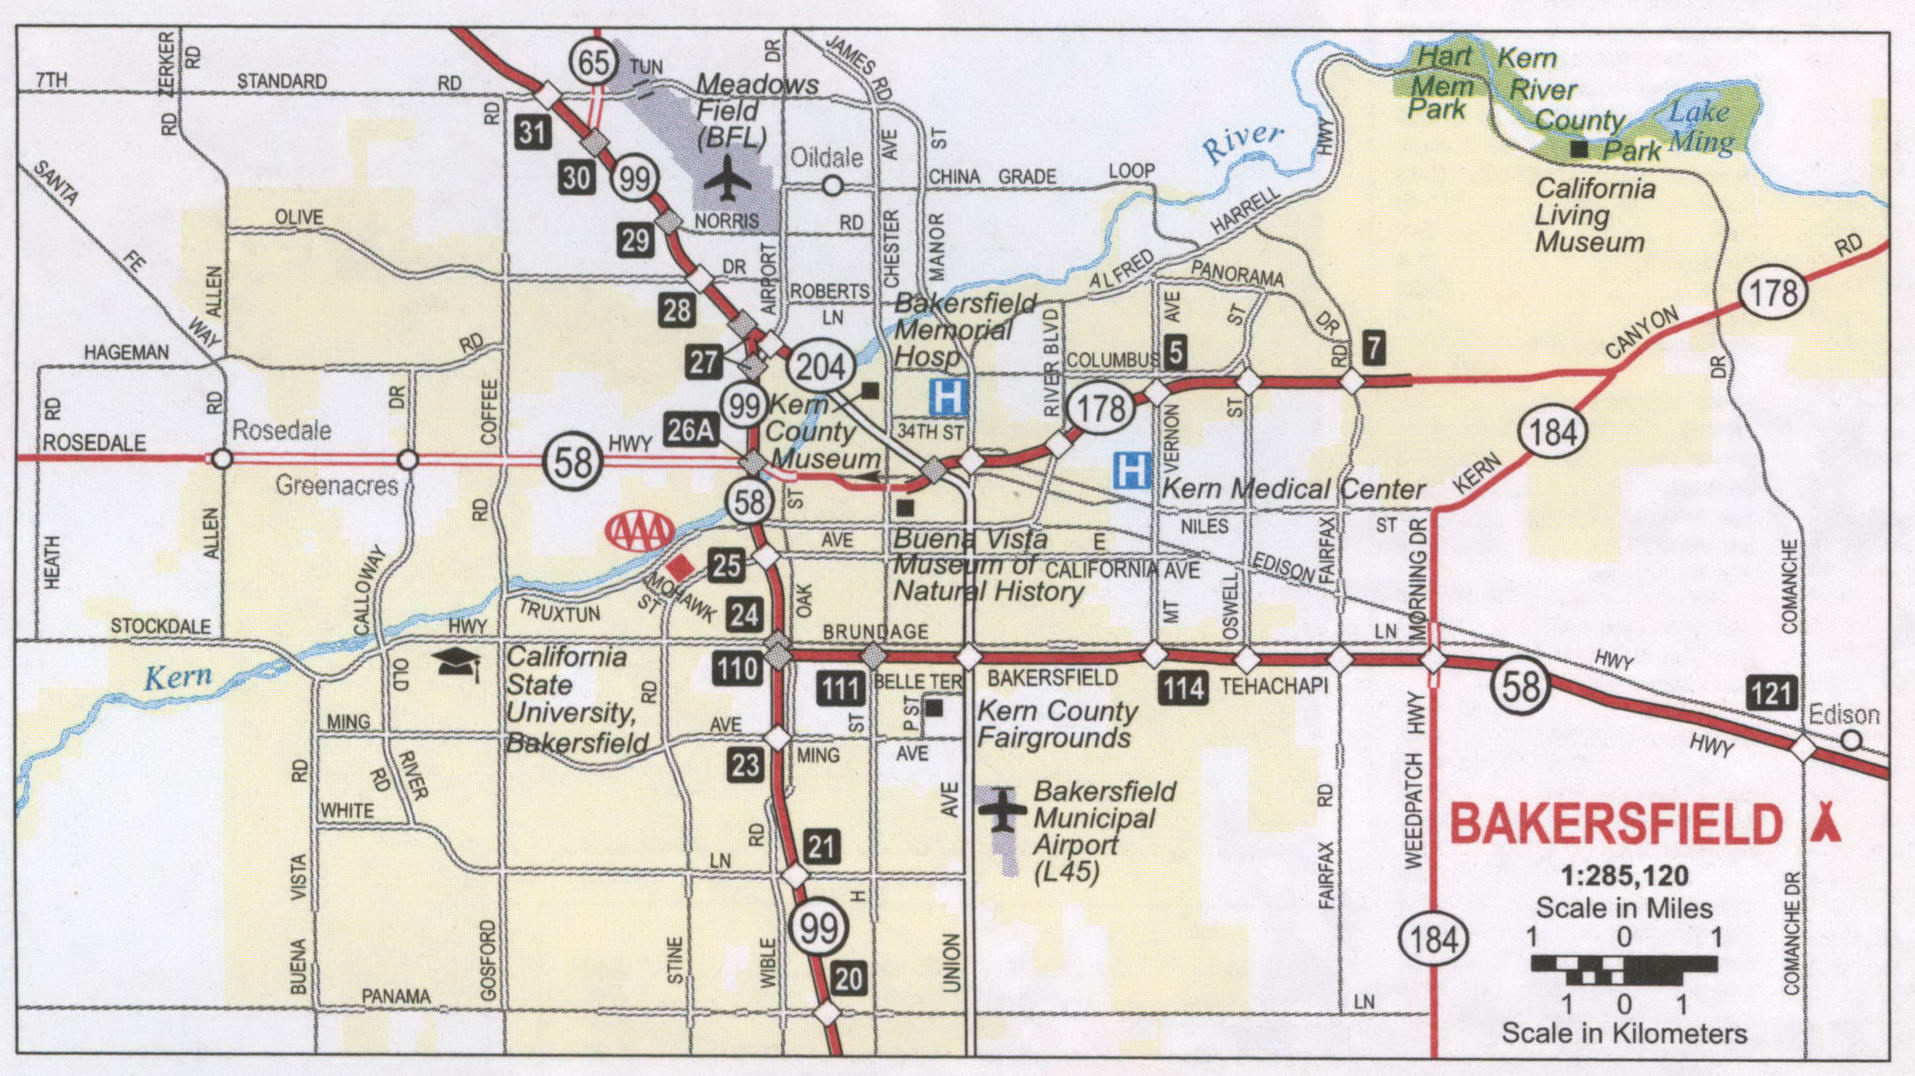 Bakersfield CA road map